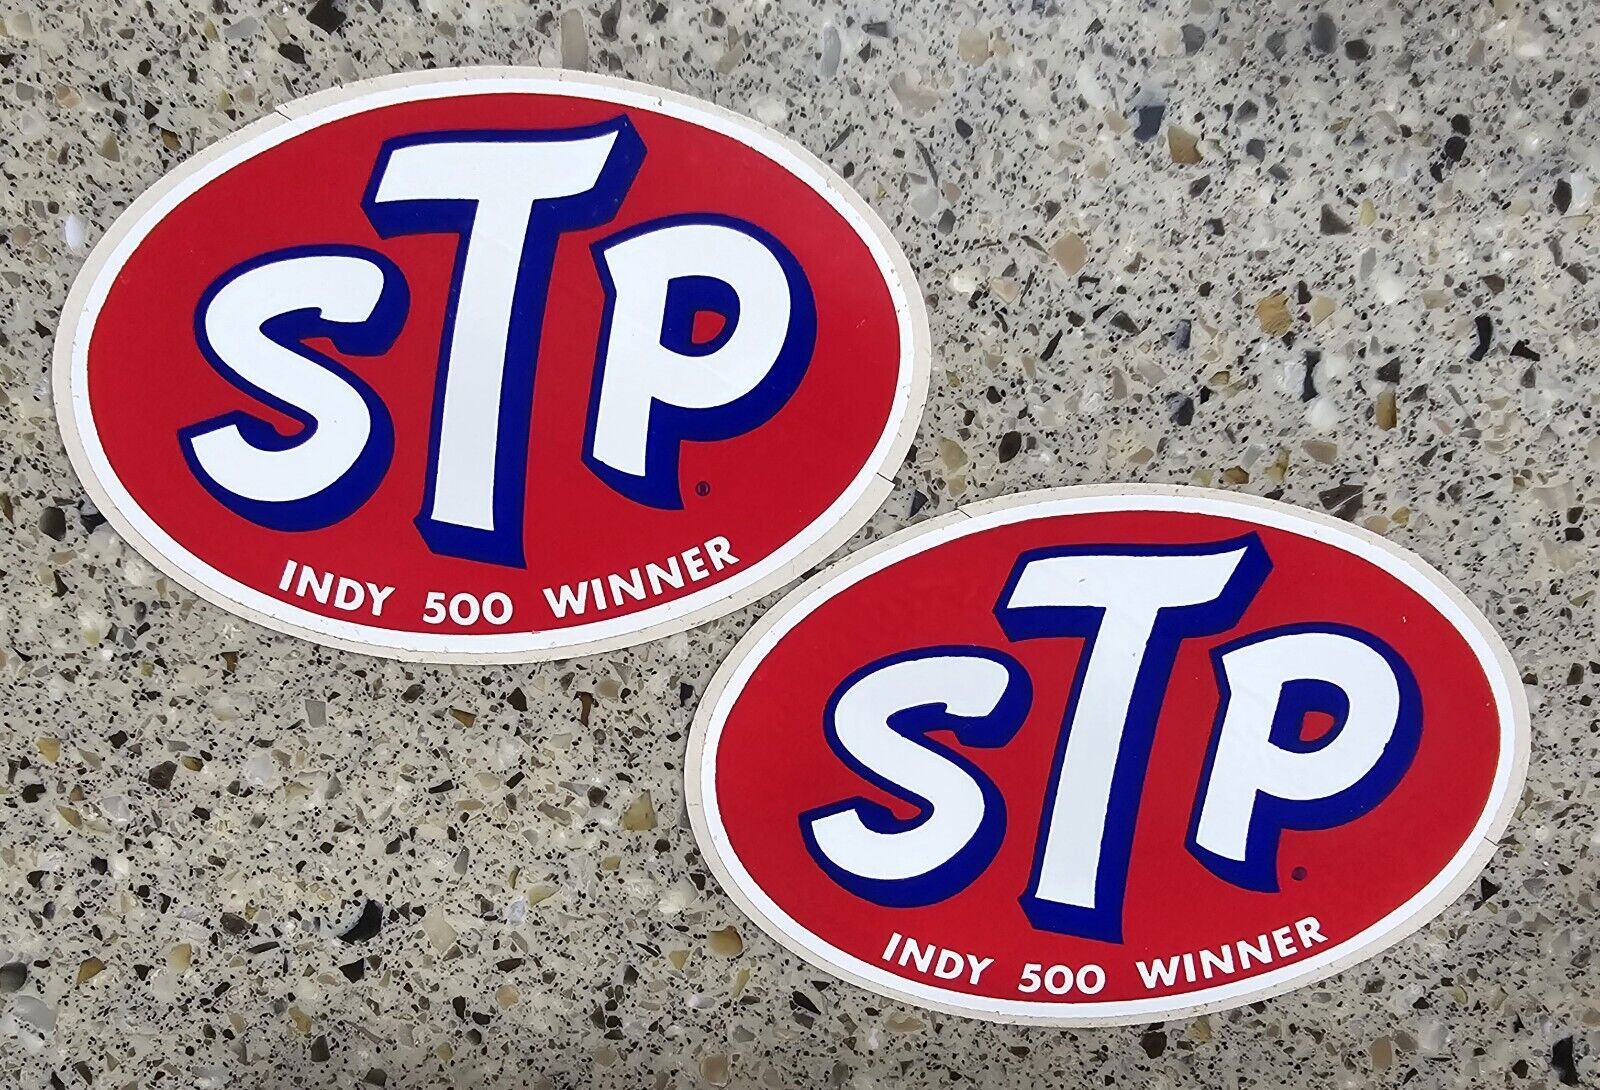 STP Indy 500 Winner - Set of 2 Original Vintage Racing Stickers